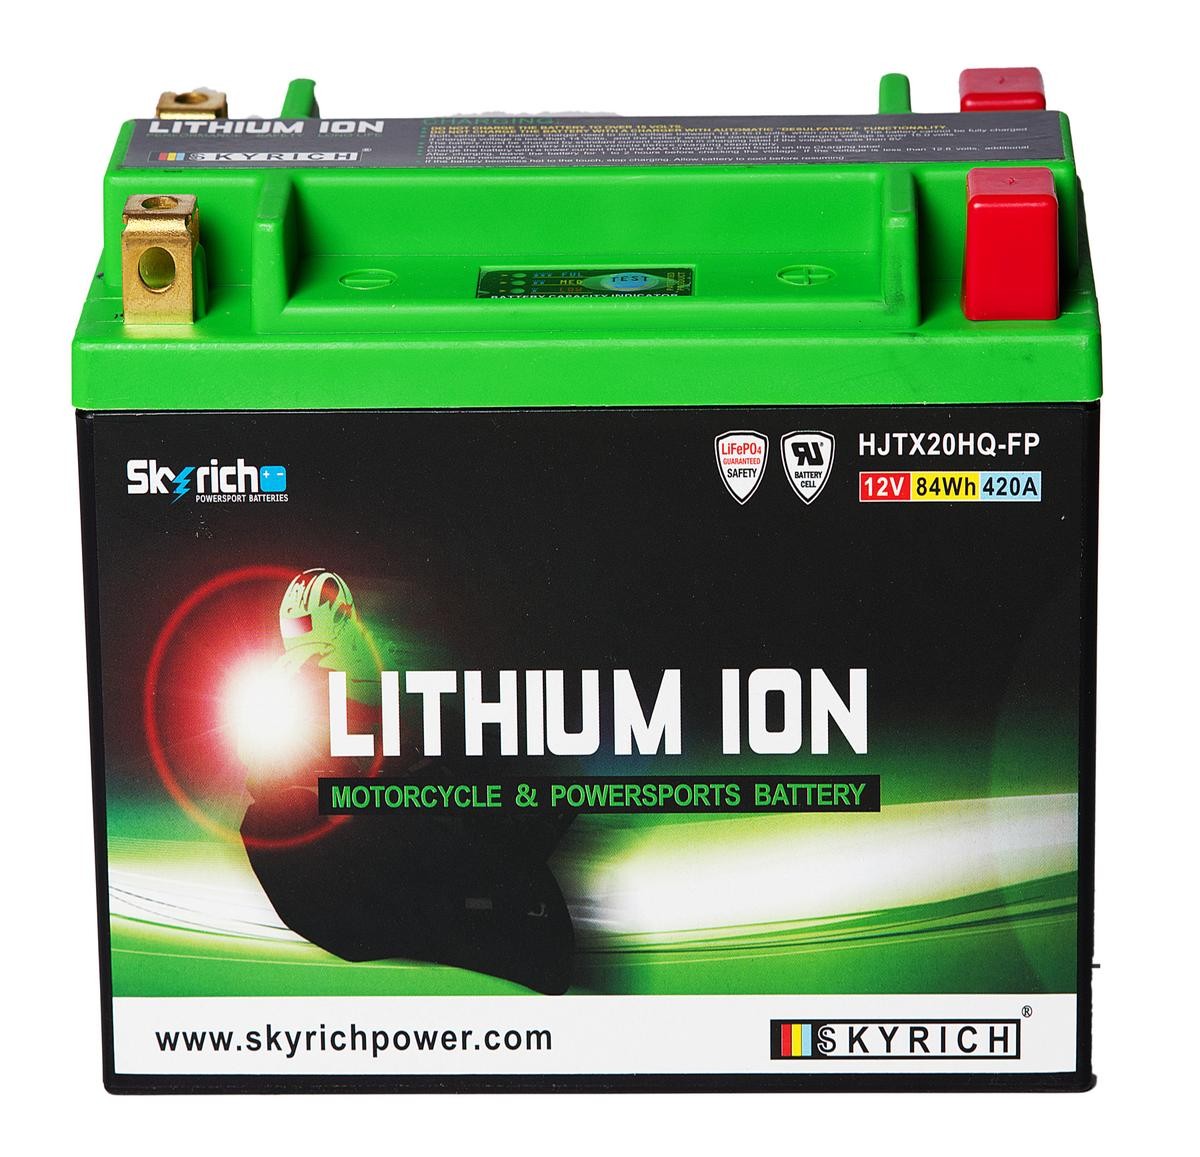 SKYRICH LITHIUM ION Batterie 12V 7Ah 420A N Li-Ionen-Batterie HJTX20HQ-FP HARLEY-DAVIDSON Mofa Maxi-Scooter